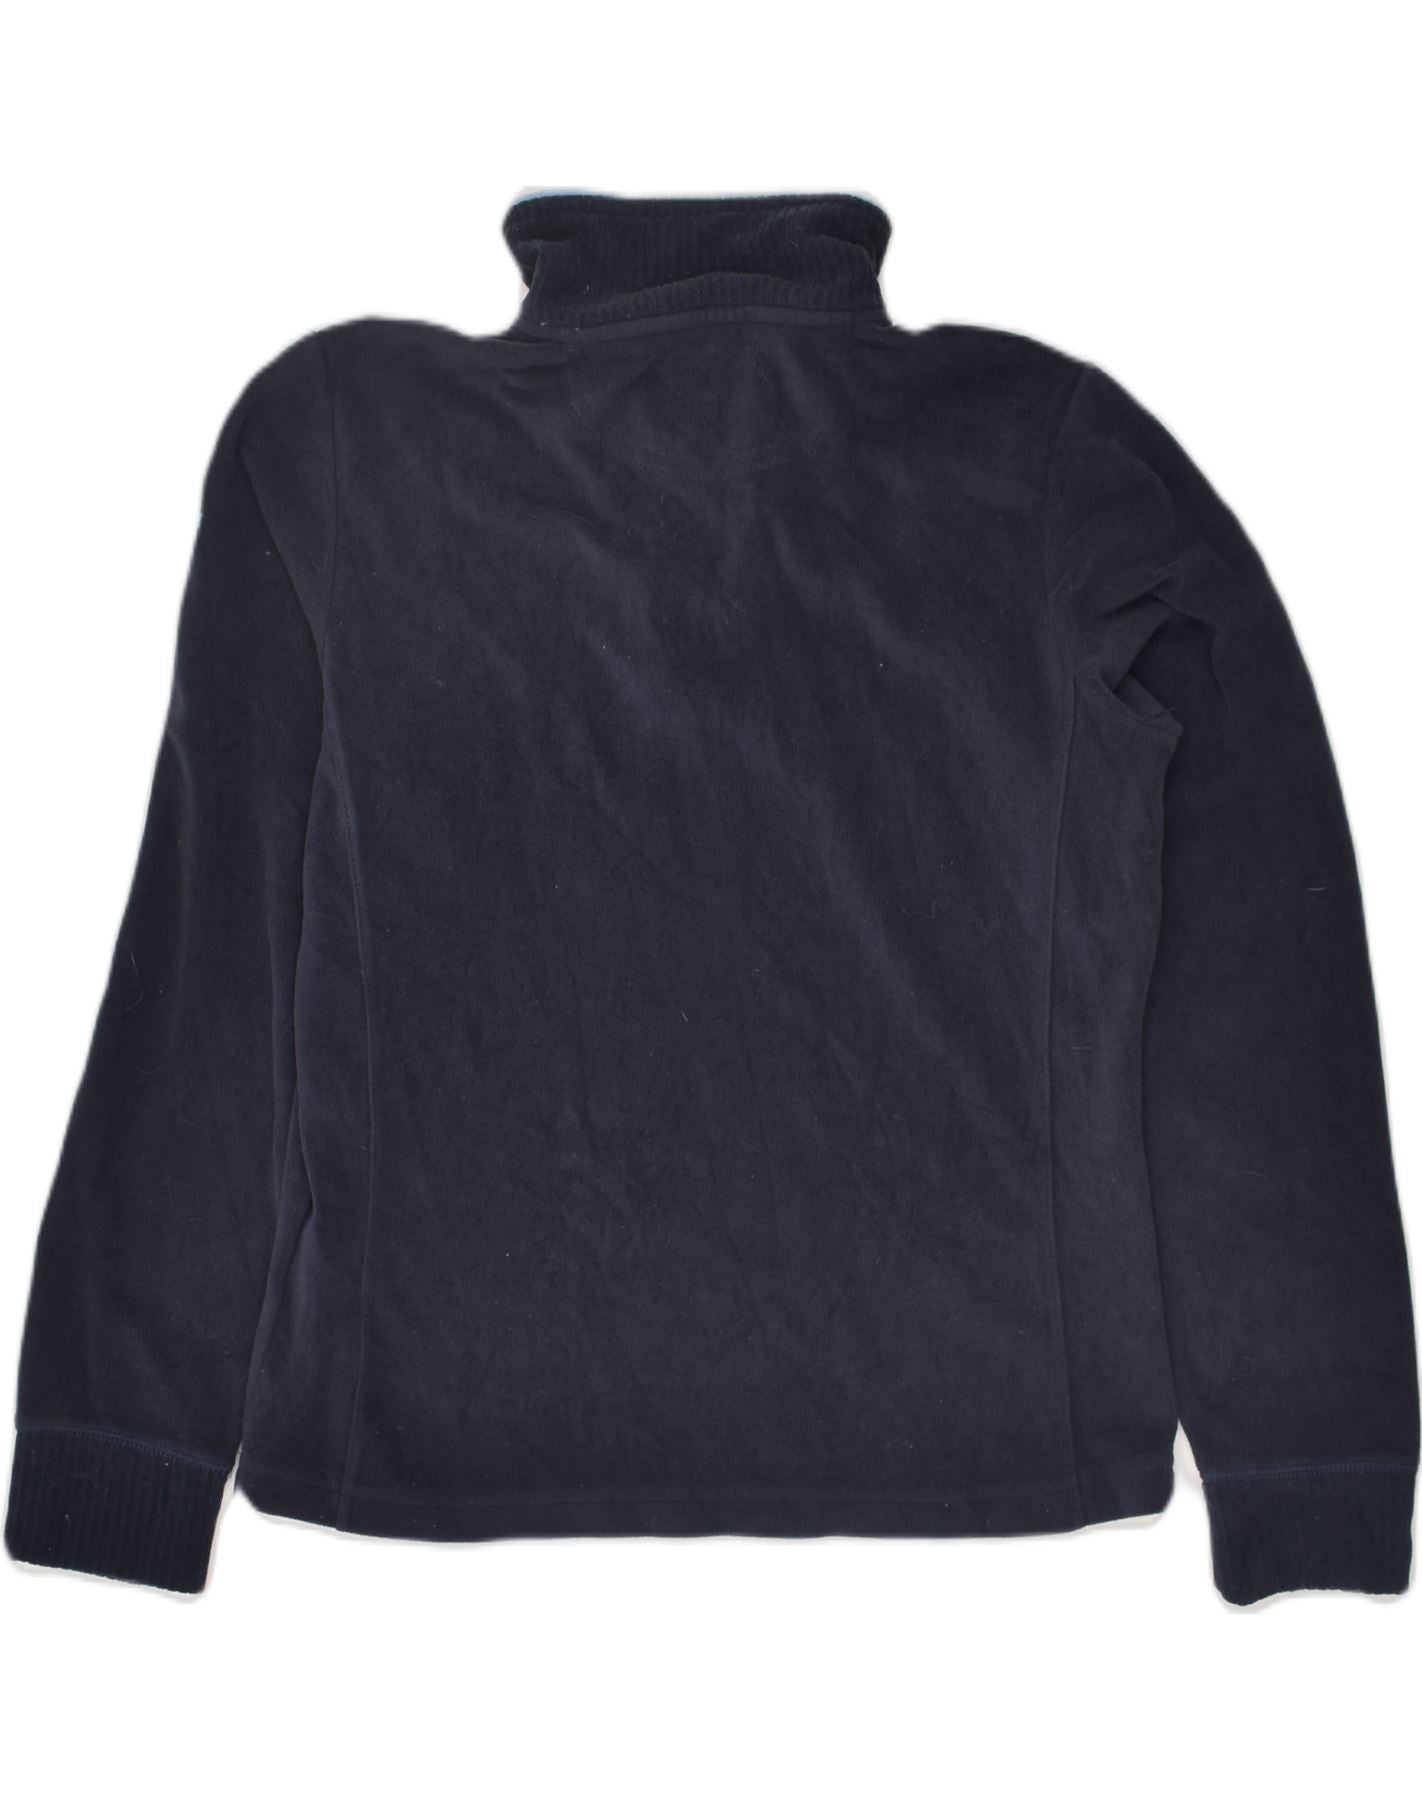 HOLLISTER Womens California Cardigan Sweater UK 12 Medium Grey